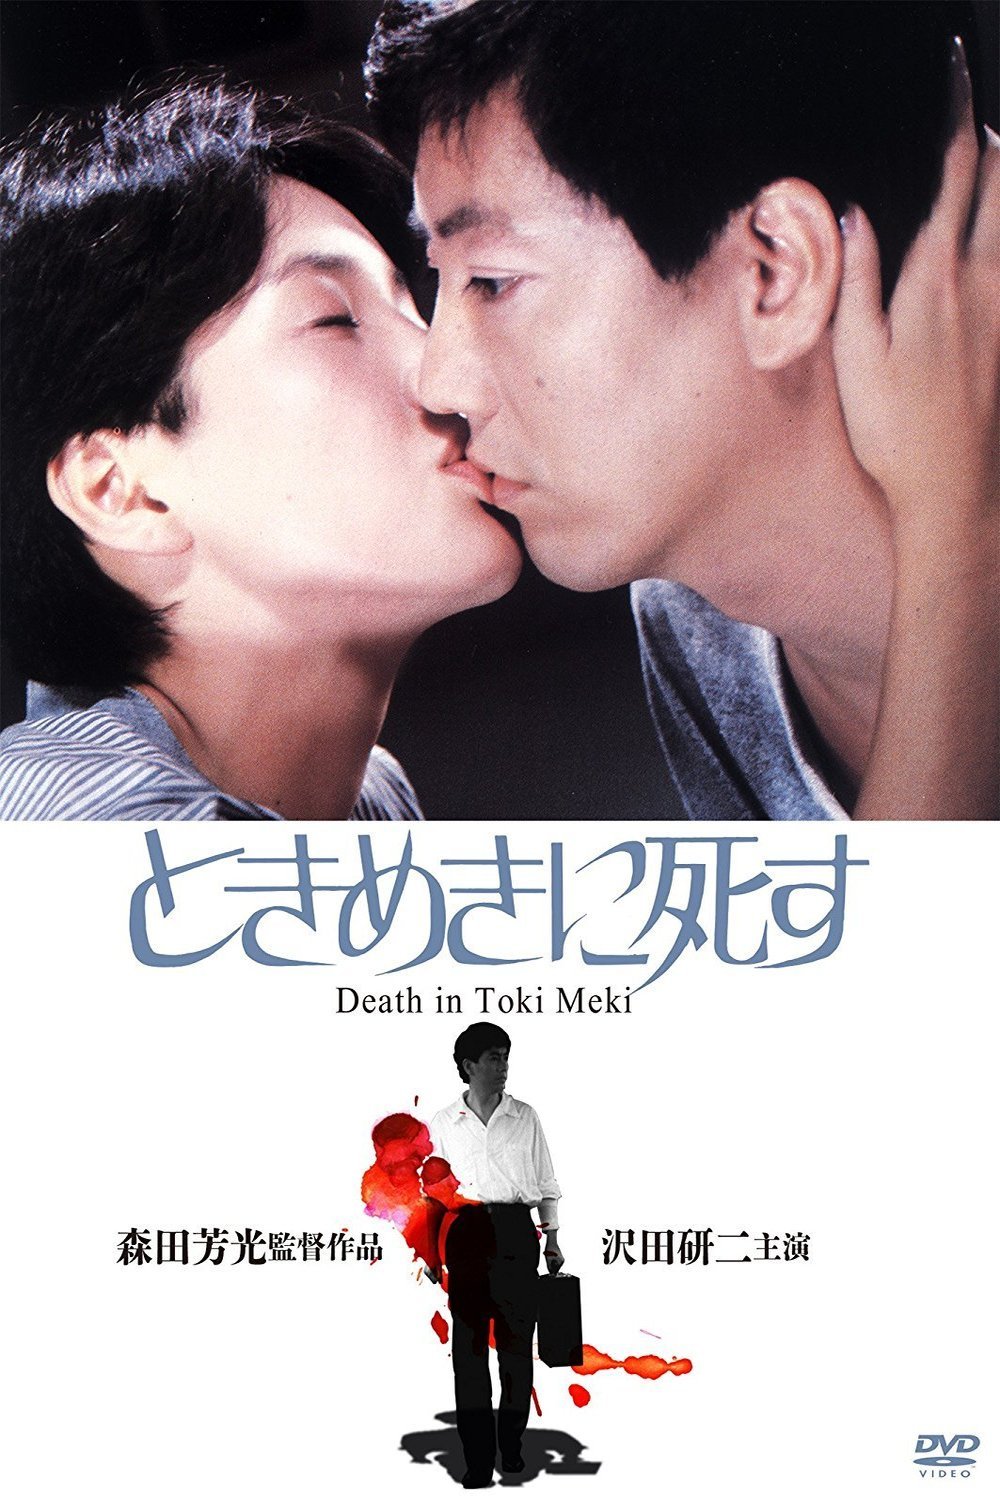 Japanese poster of the movie Deaths in Tokimeki